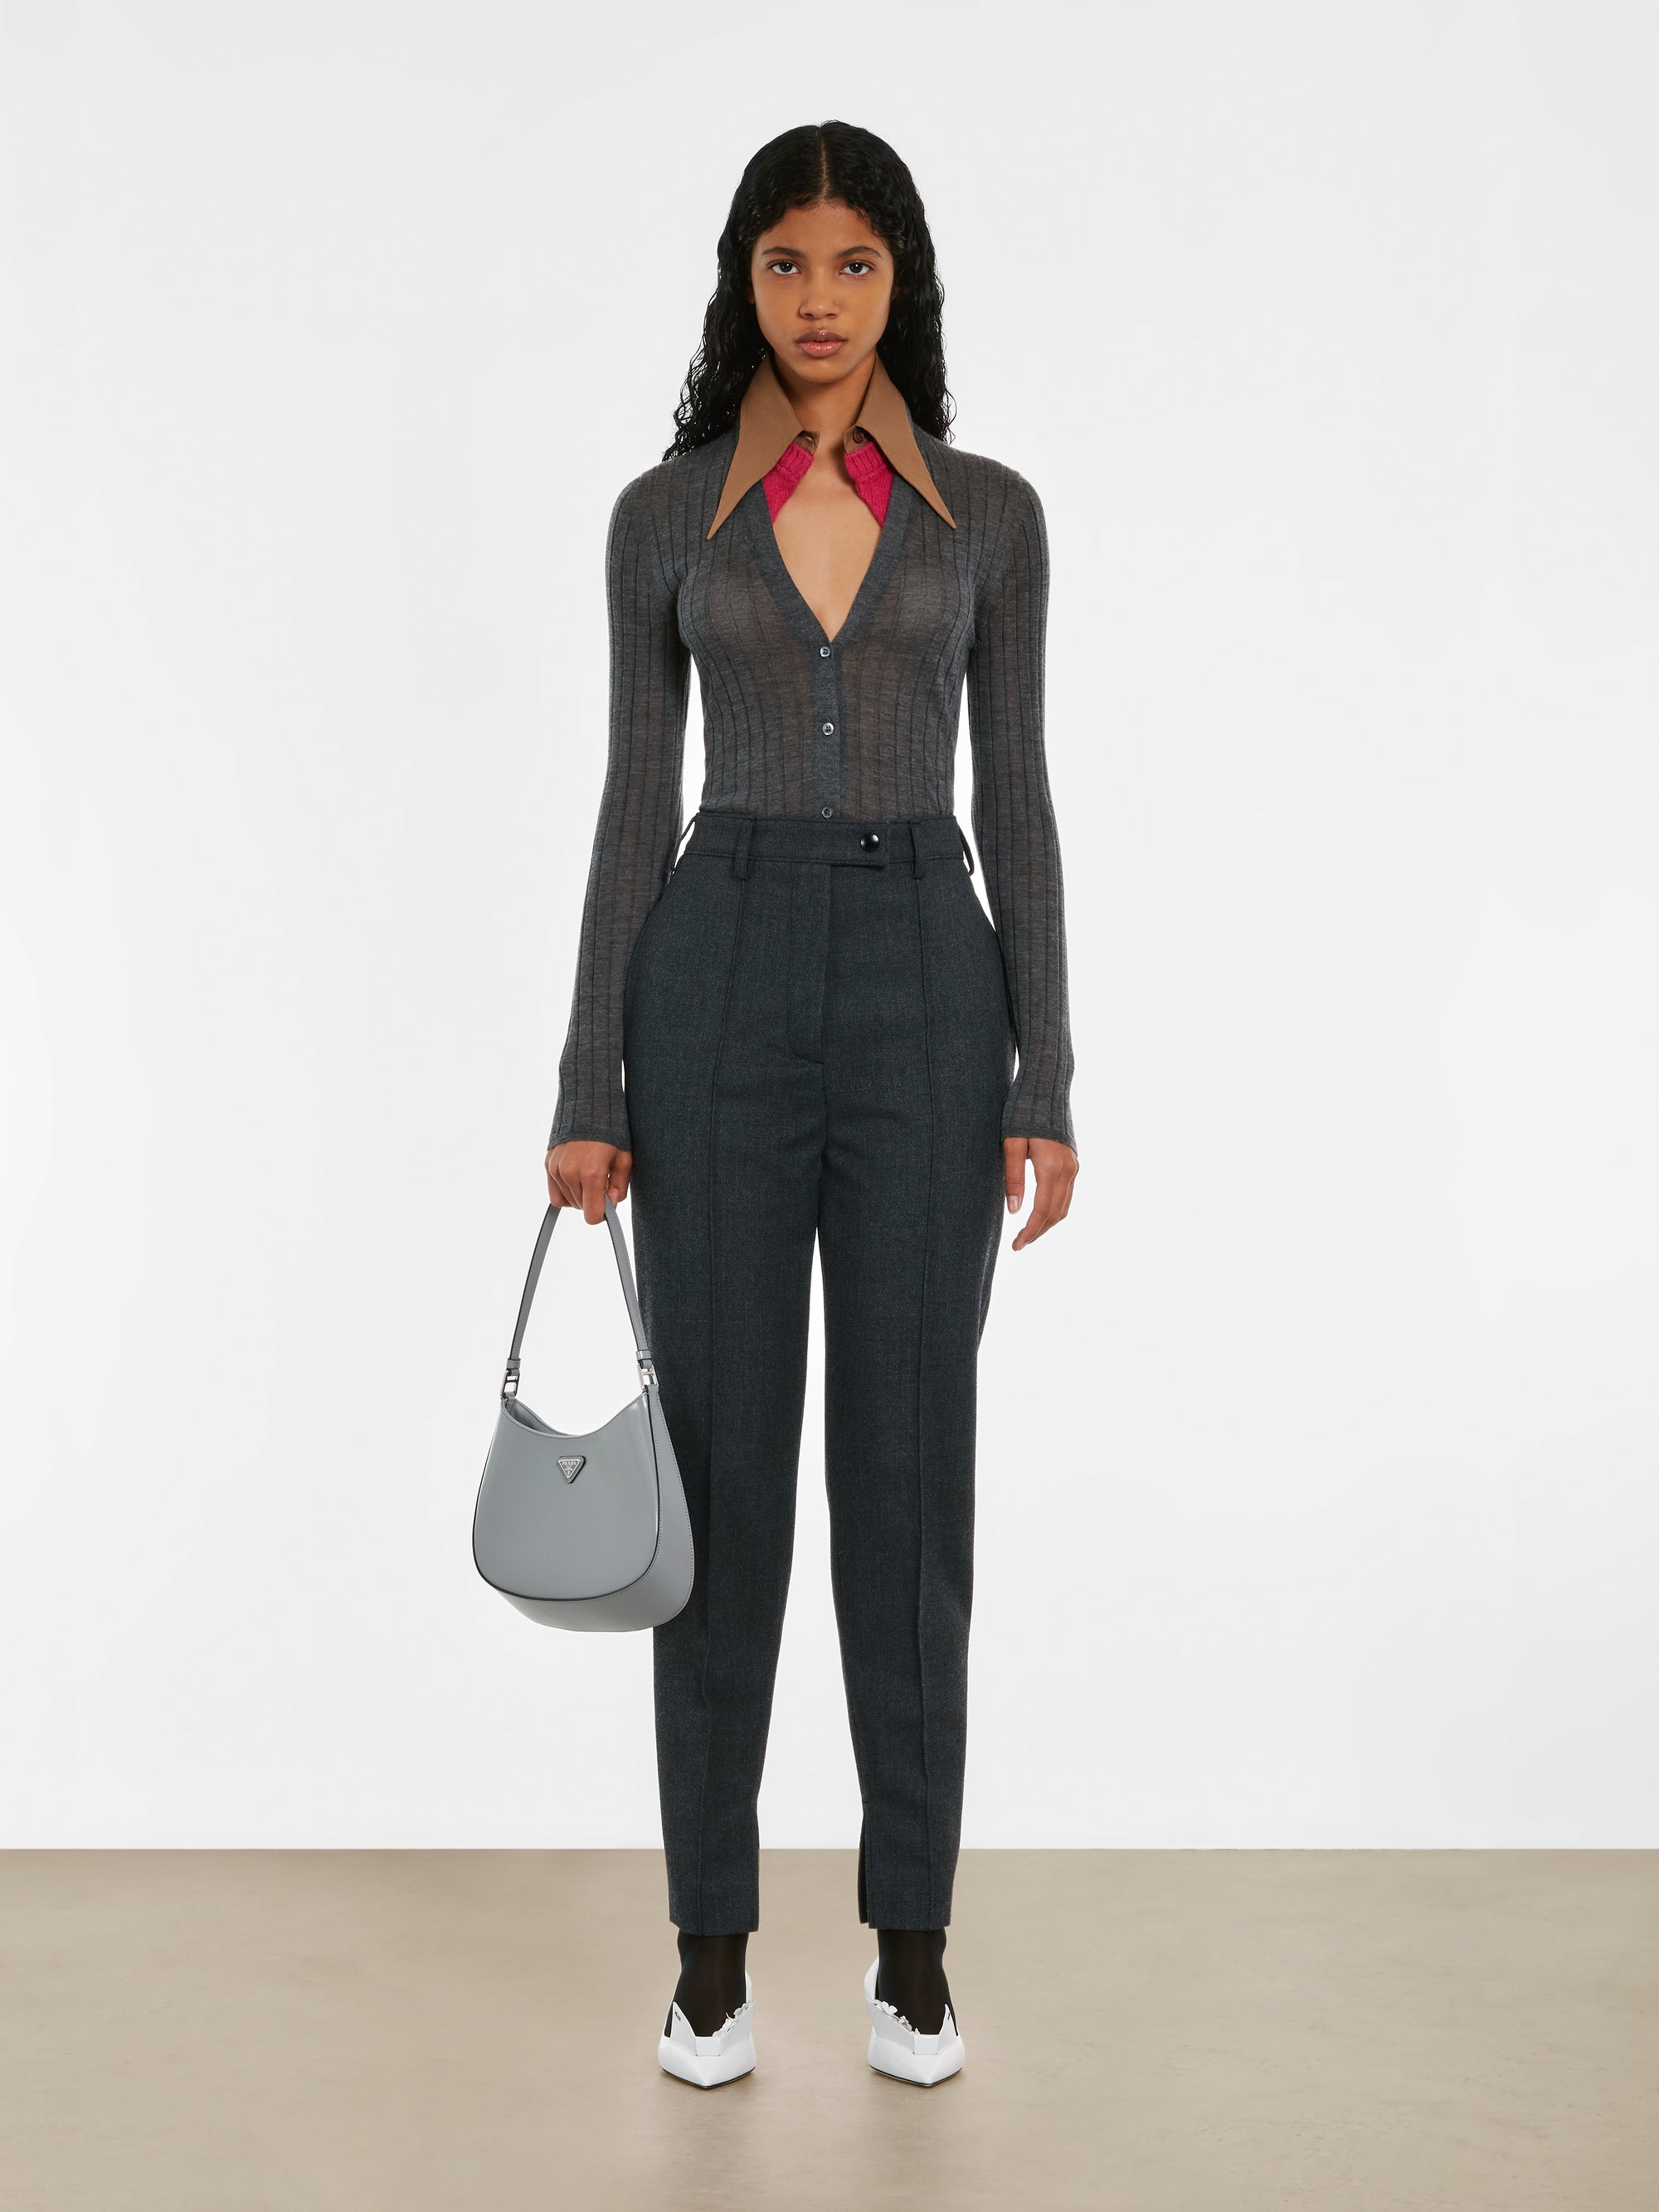 Prada - Women’s Cashmere and Silk Cardigan with Collar - (Slate Grey) view 4